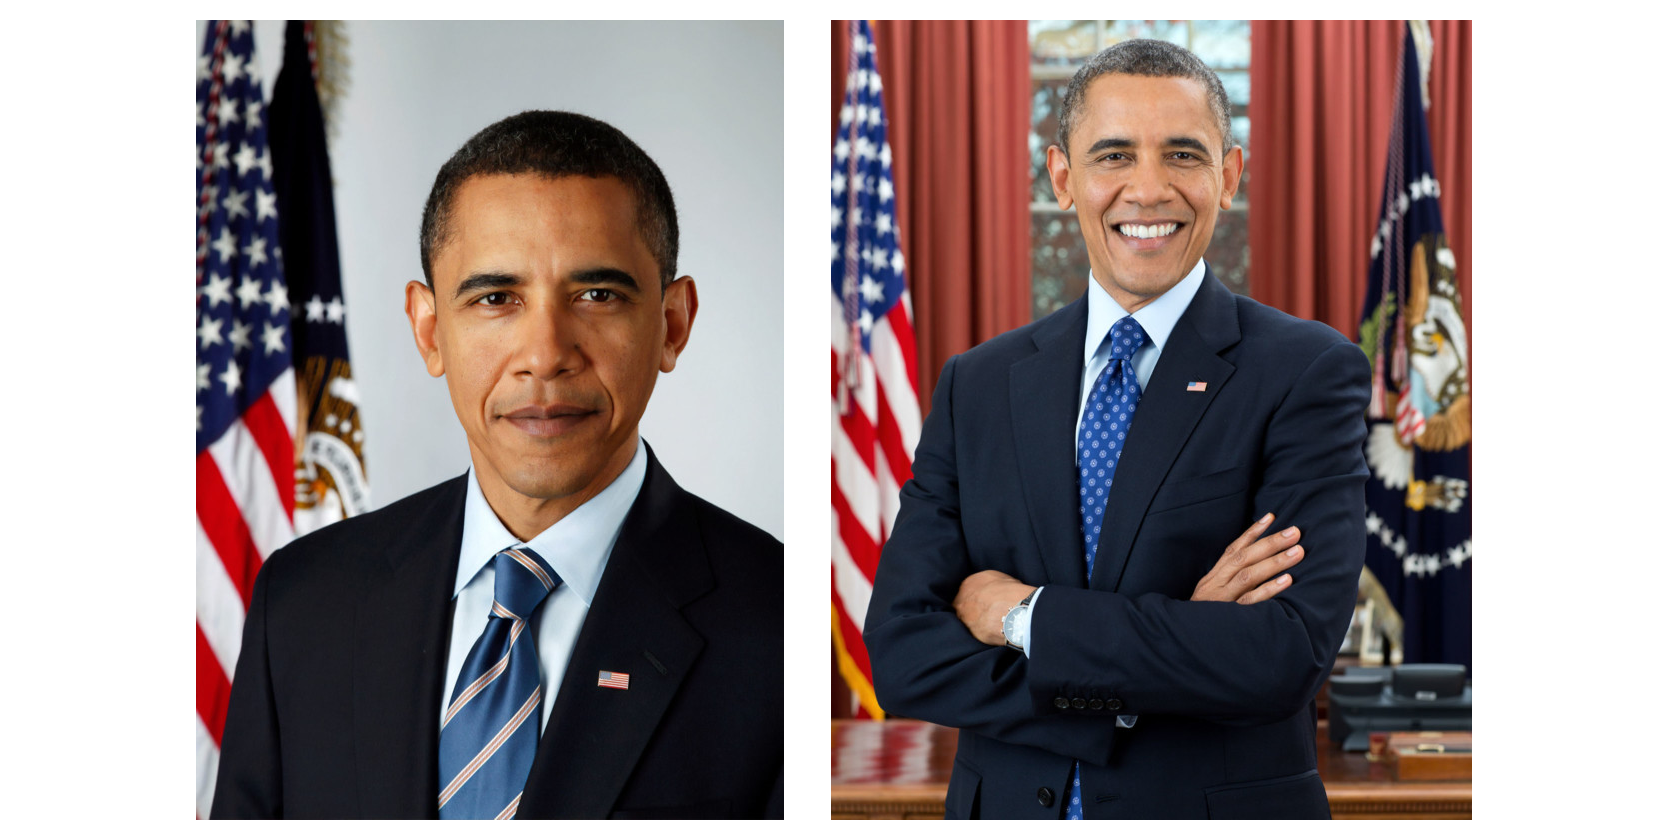 Obama's presidential photos